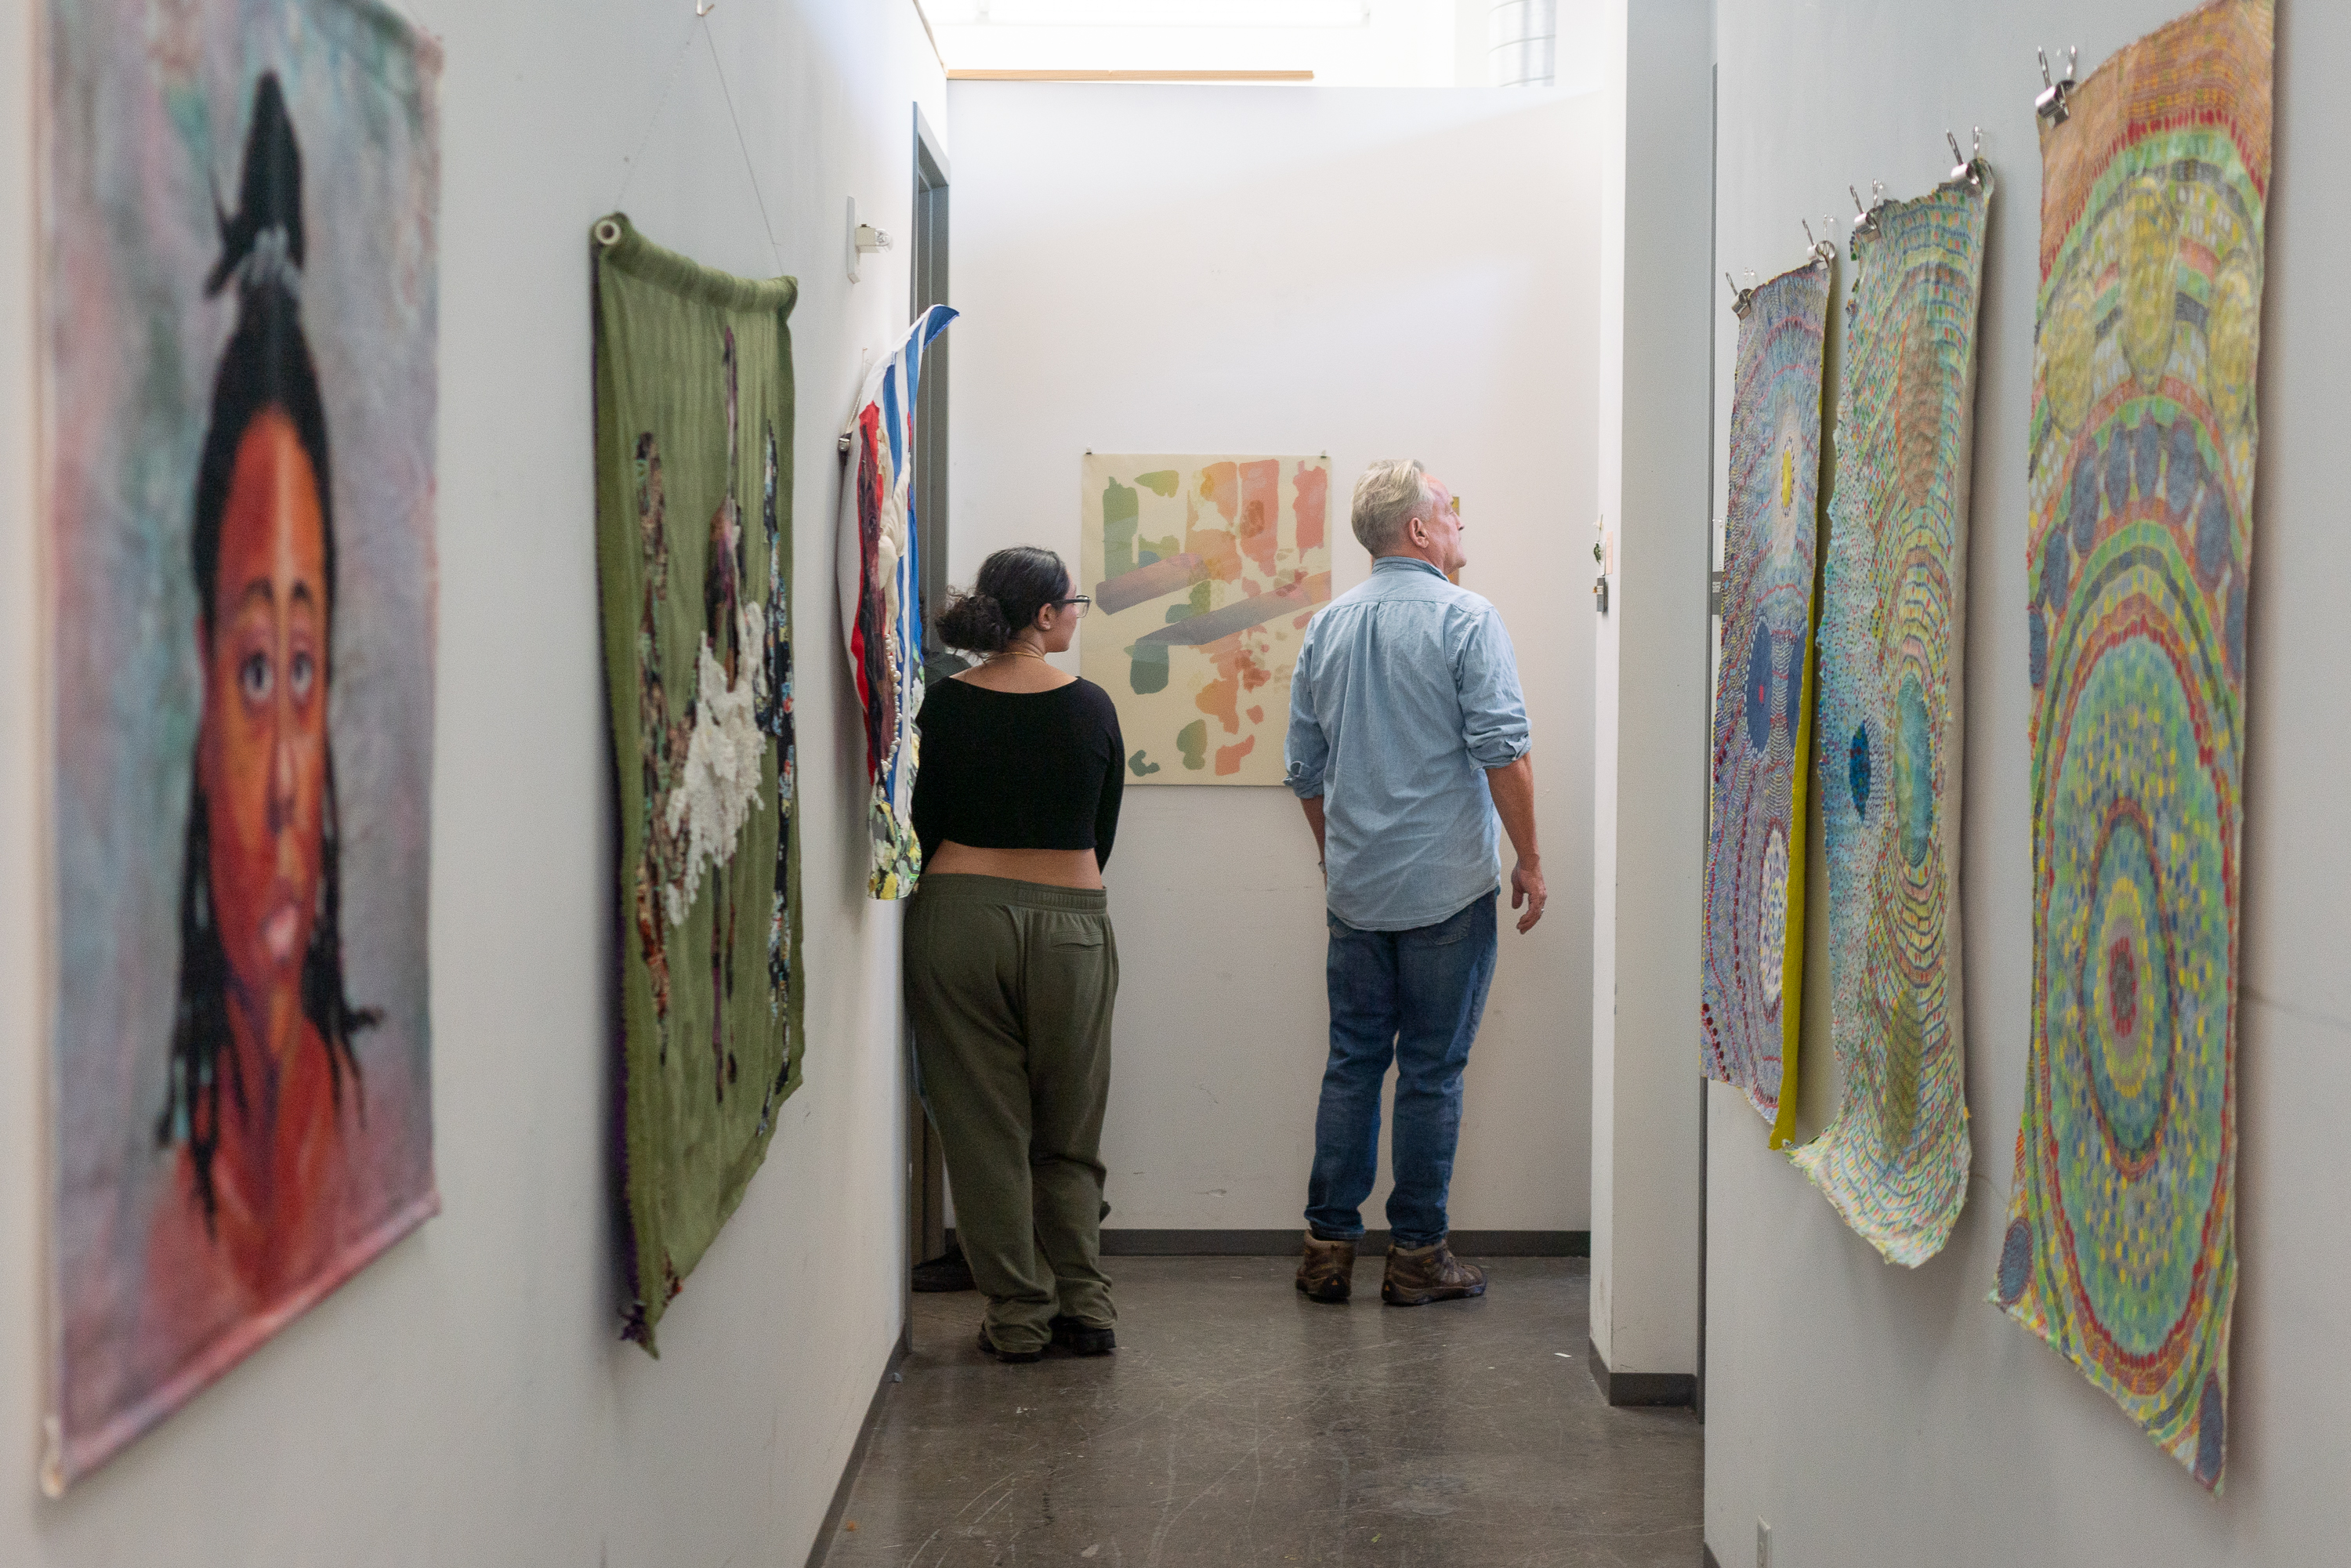 Two people in corridor viewing artworks on display